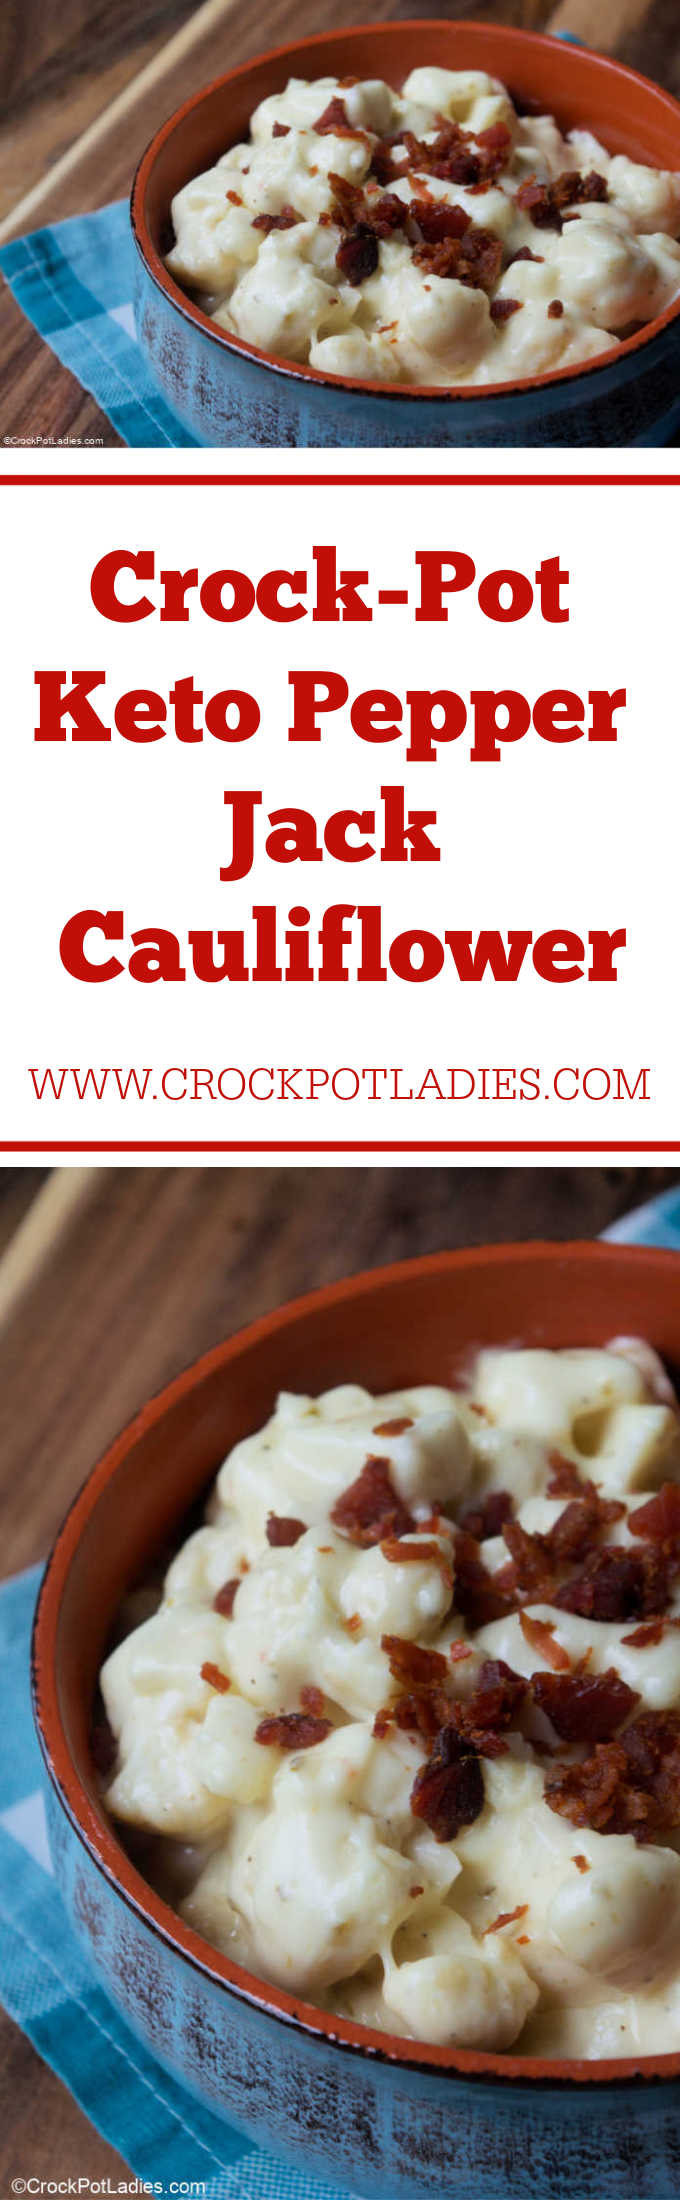 Crock-Pot Keto Pepper Jack Cauliflower